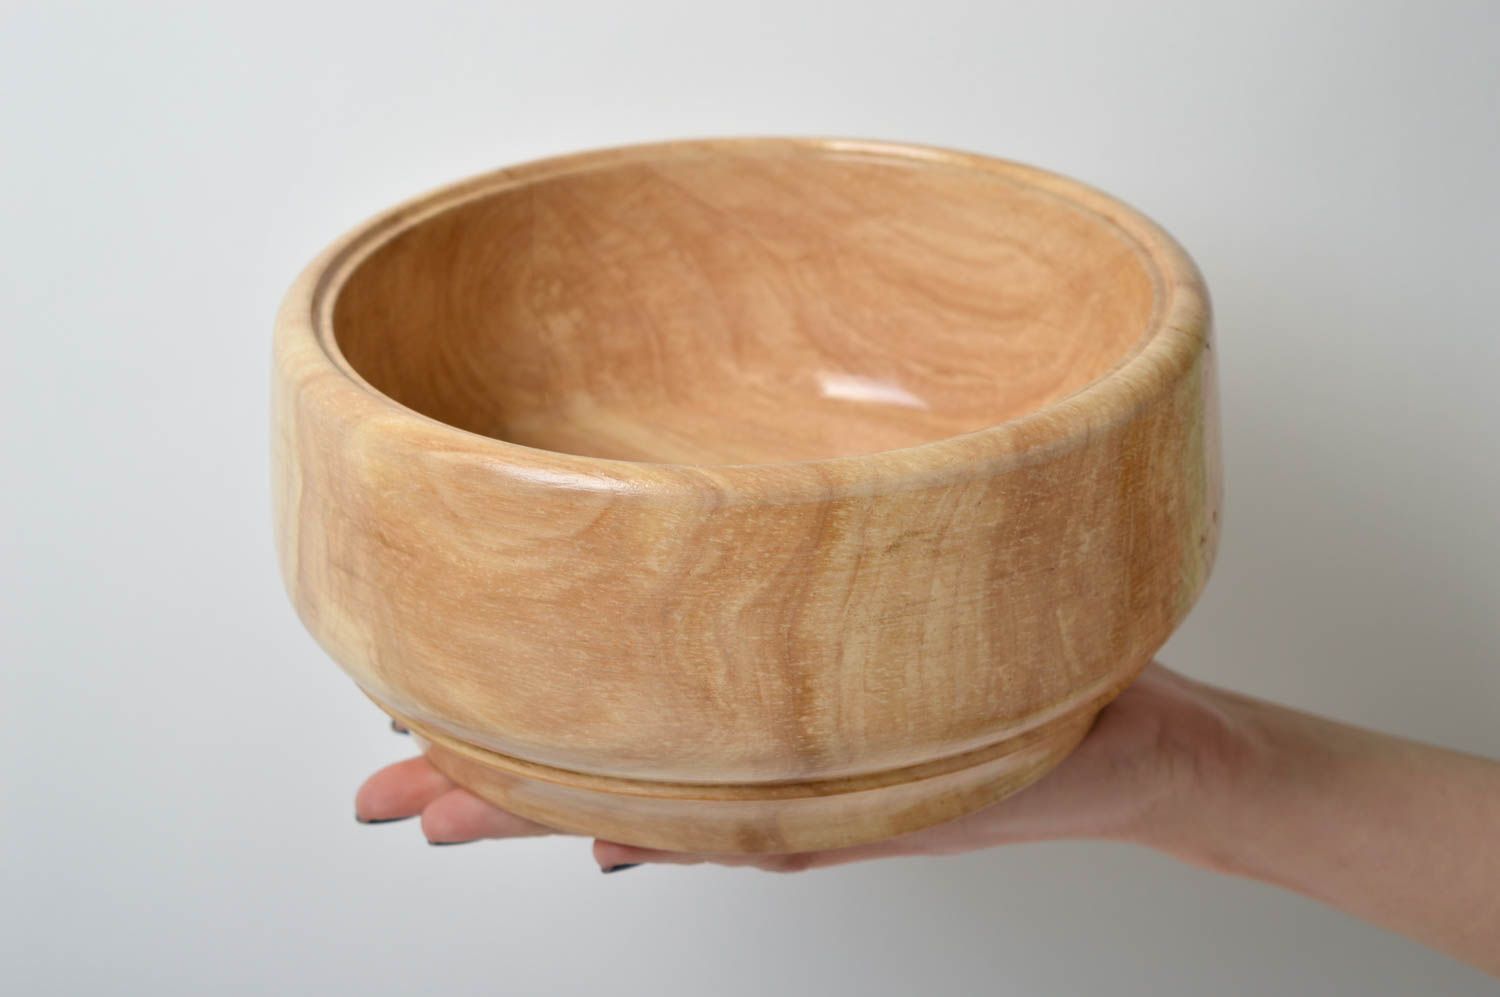 Handmade wooden bowl candy bowl design wood craft kitchen supplies ideas photo 5